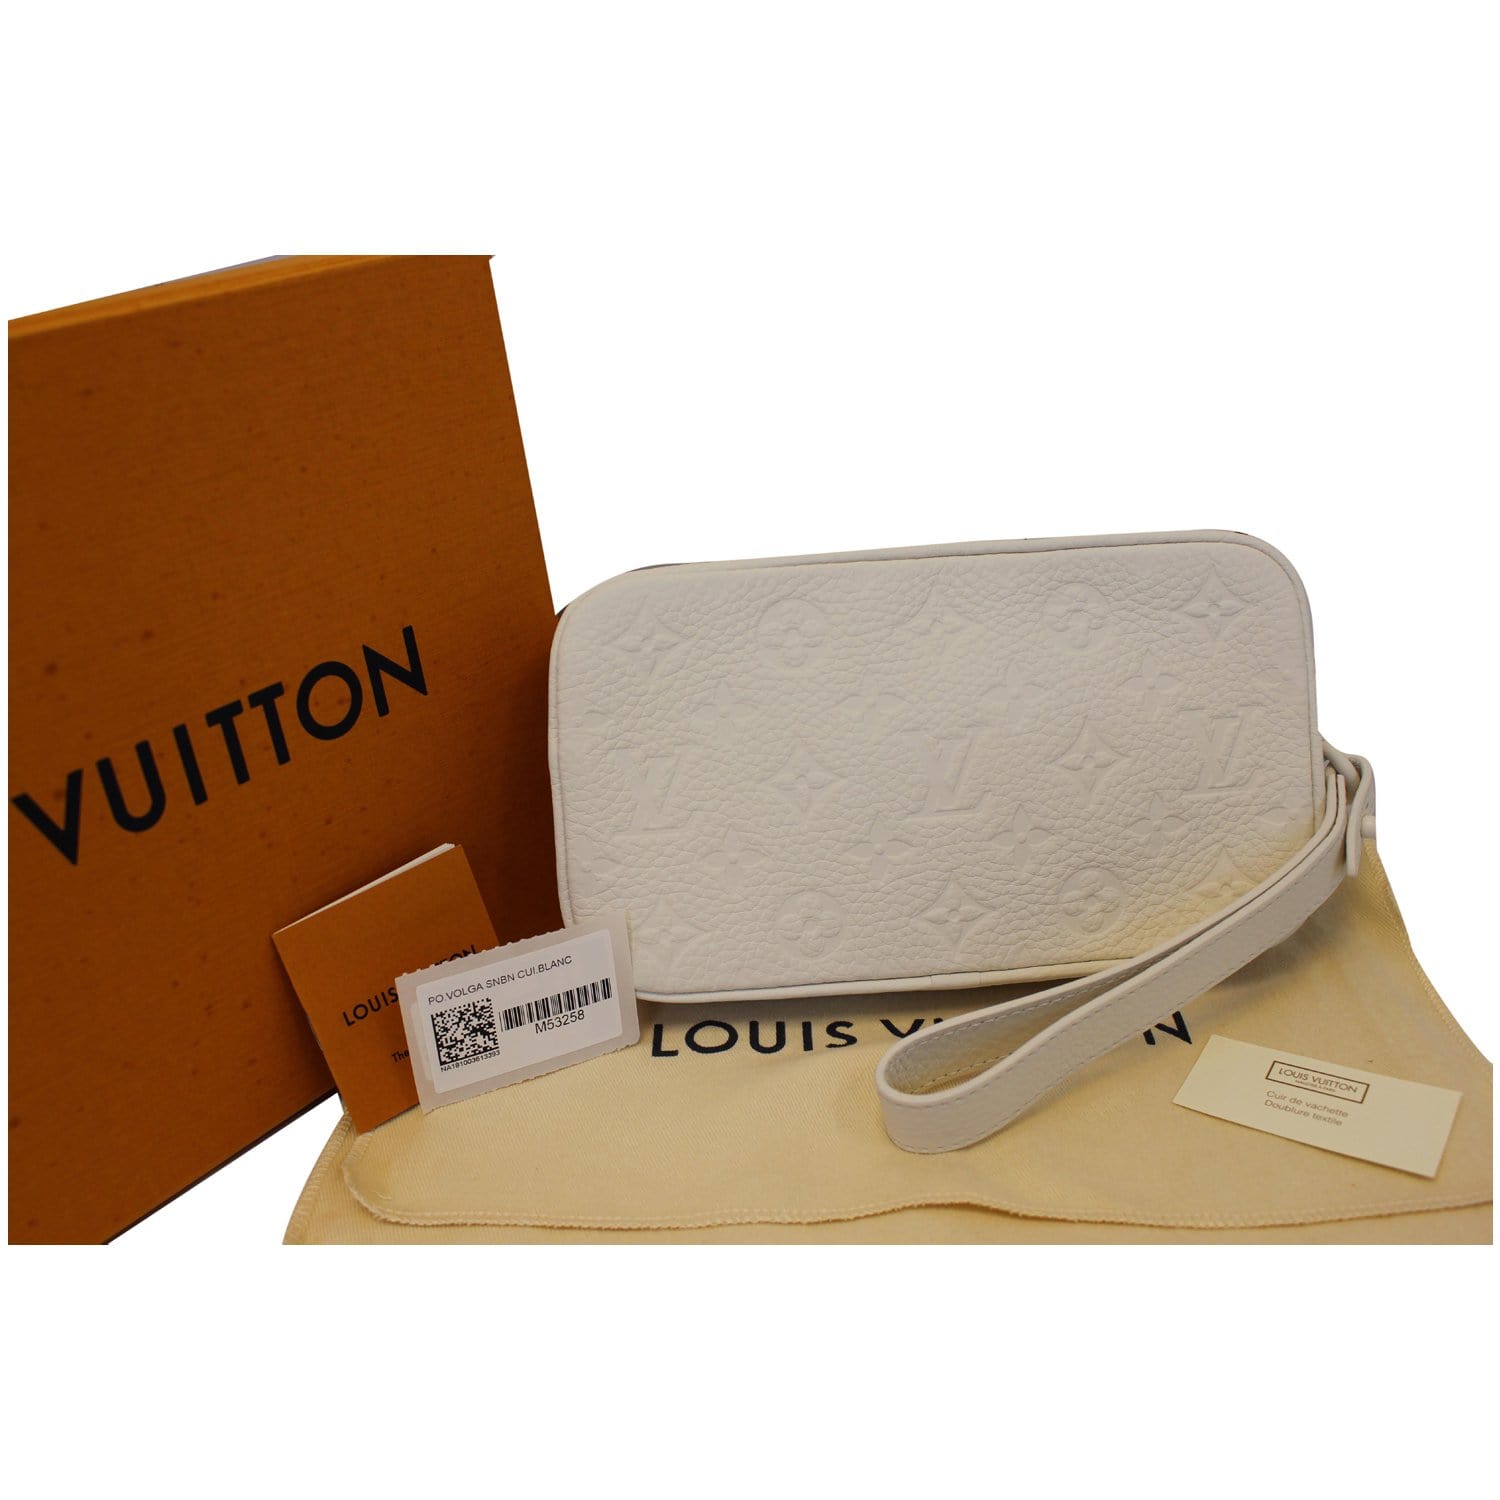 Shop Louis Vuitton MONOGRAM Pochette Volga (M68321) by nordsud